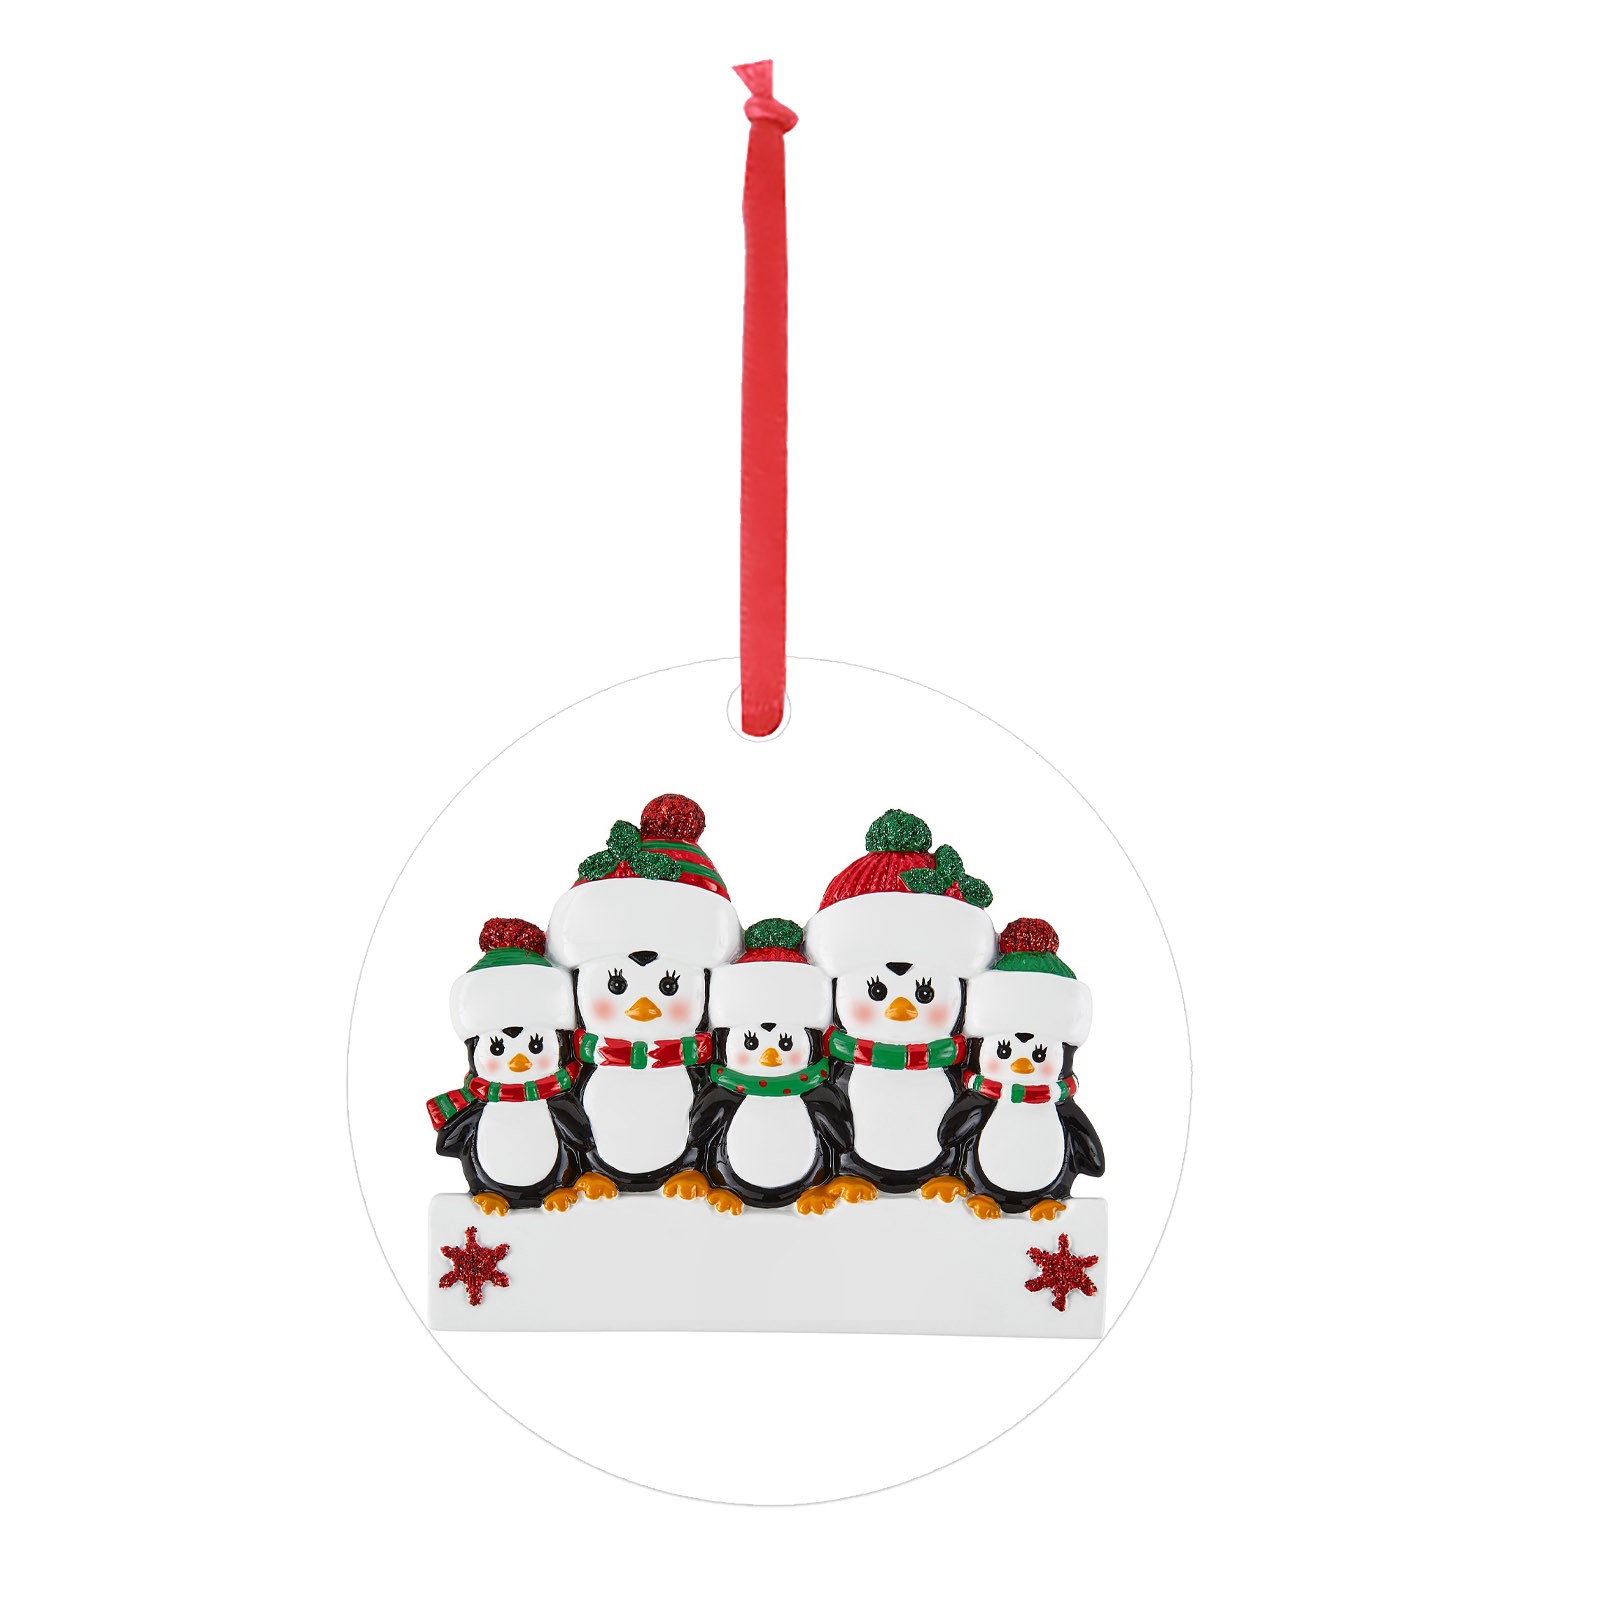 Dtydtpe Christmas Decorations, Home Decor Art Personalized Penguin Towel Christmas Pendant Christmas Holiday Decor - image 1 of 7